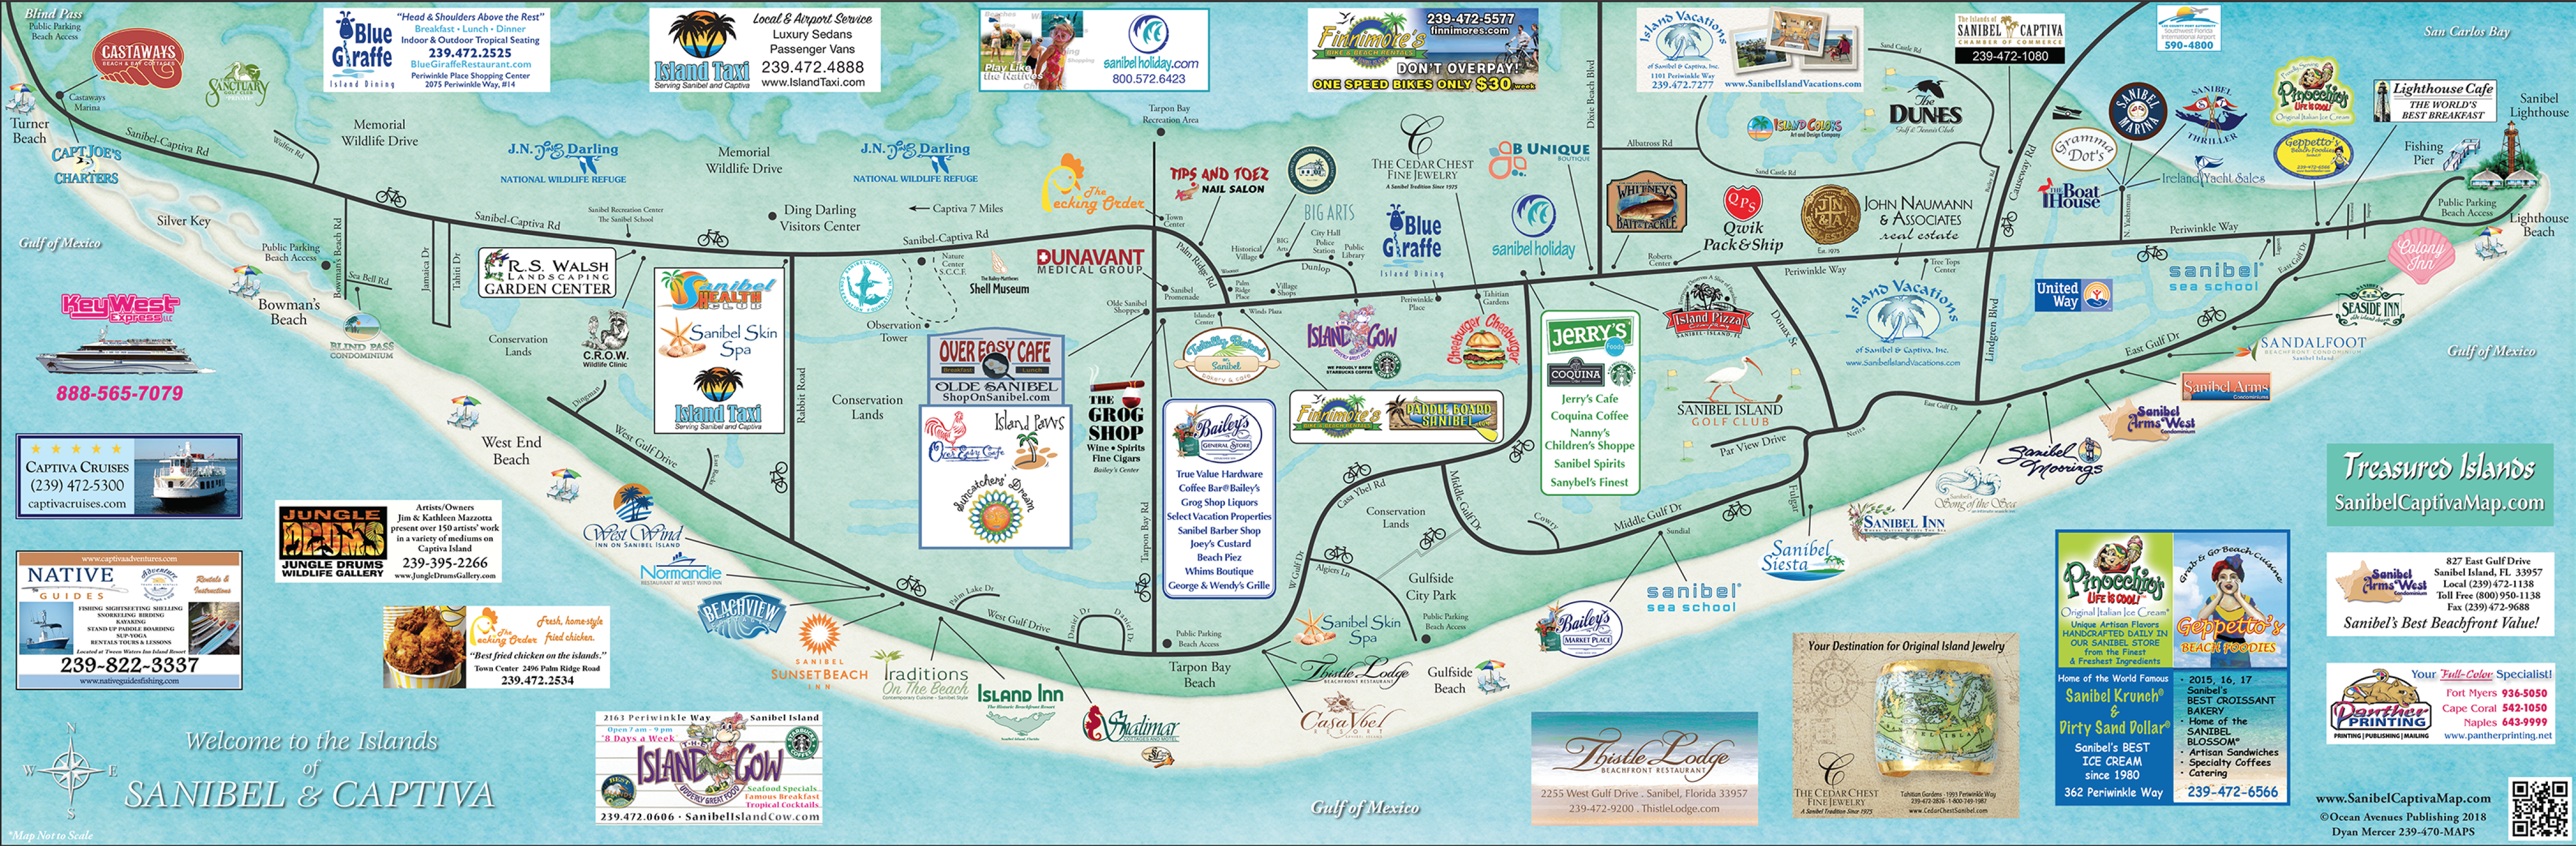 Sanibel Island Map Guest Information Island Inn